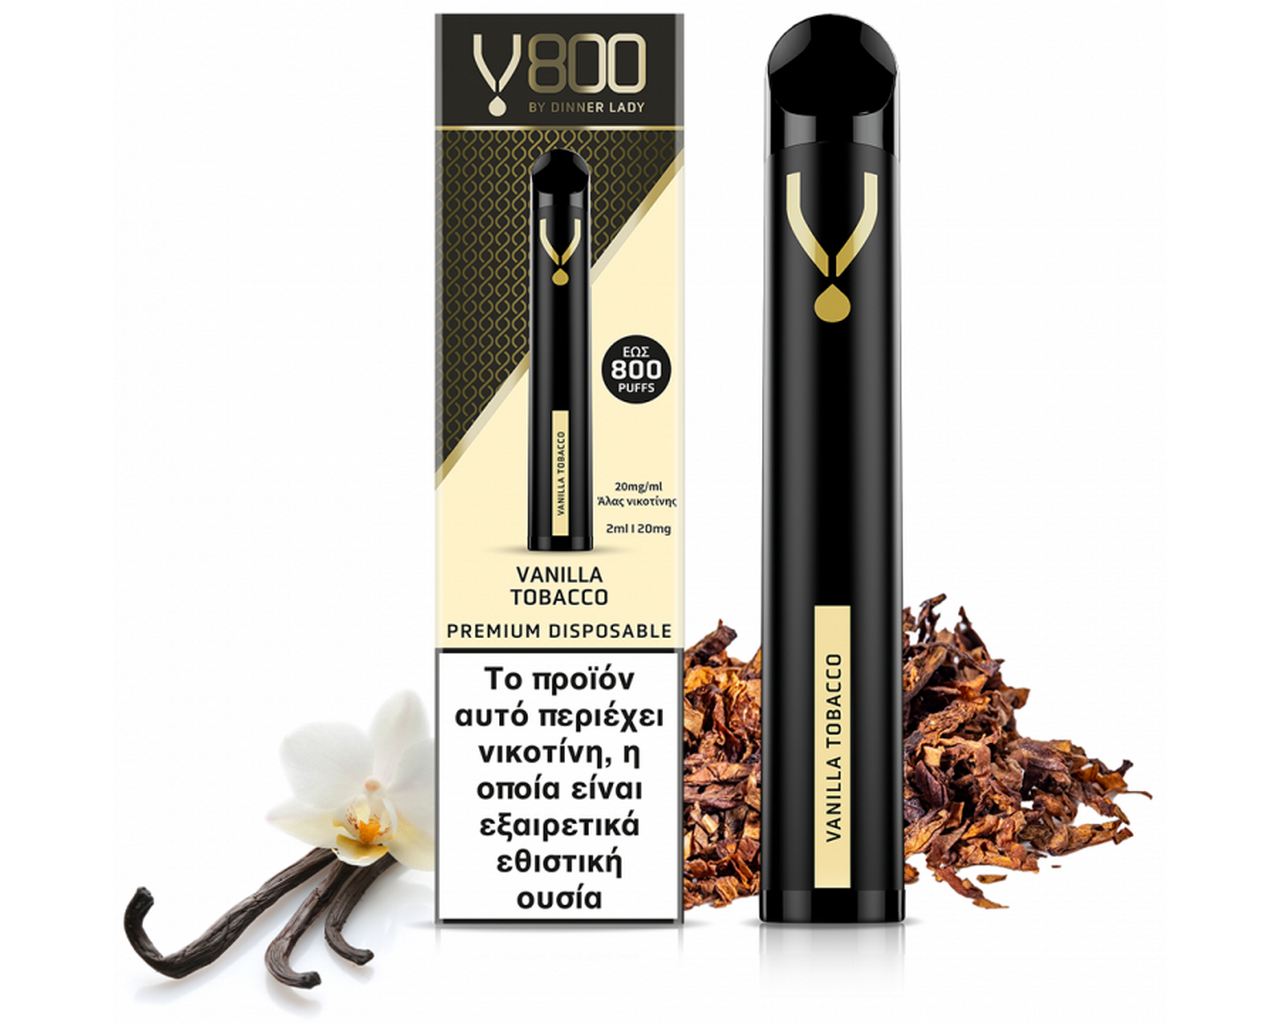 Dinner Lady V800 Disposable Vanilla Tobacco 2ml | 20mg